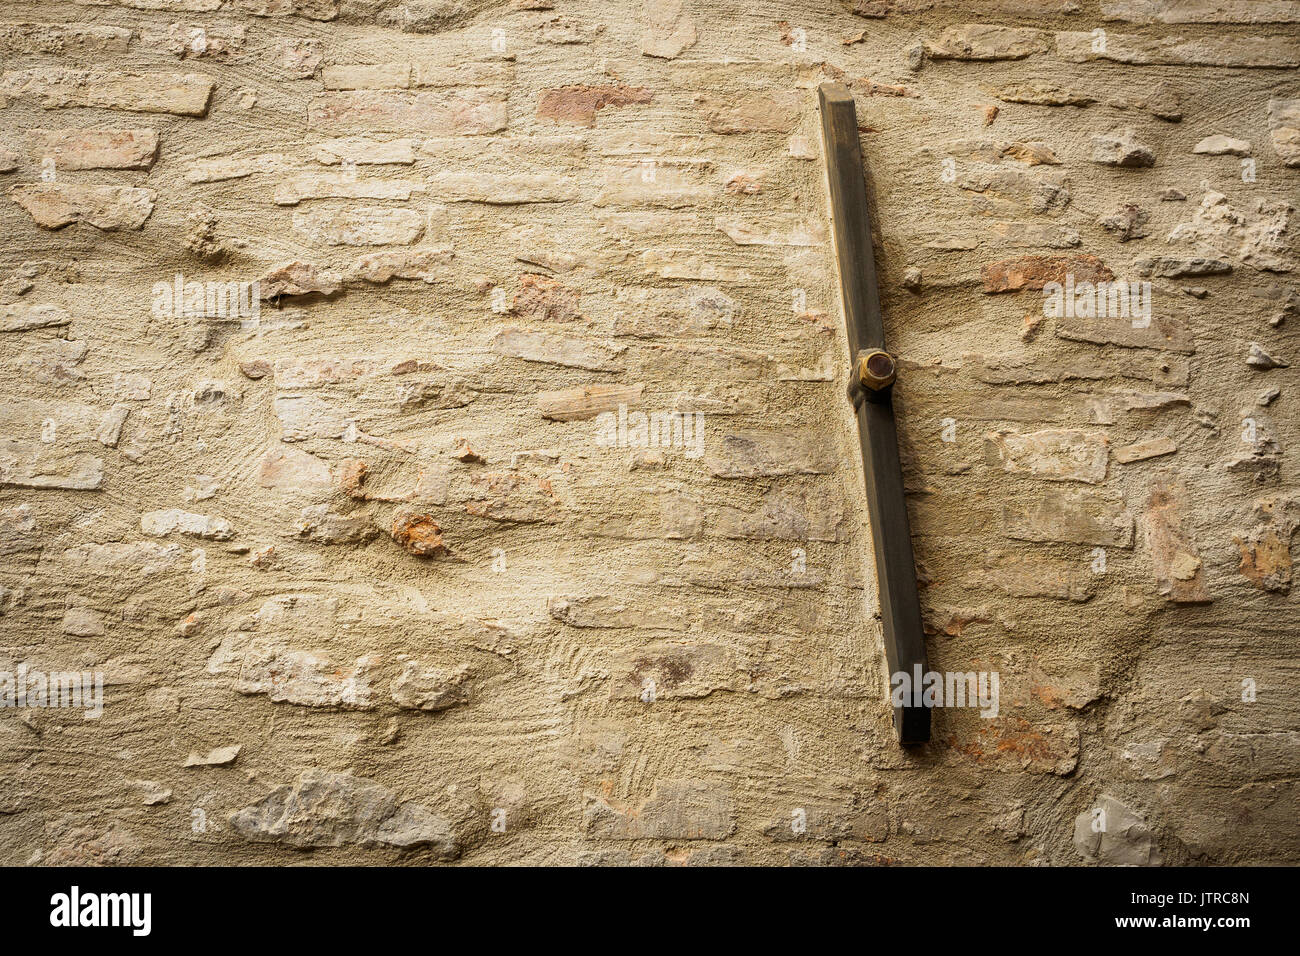 Old metal rod anchor bar on a brick and stone masonry wall. Stock Photo